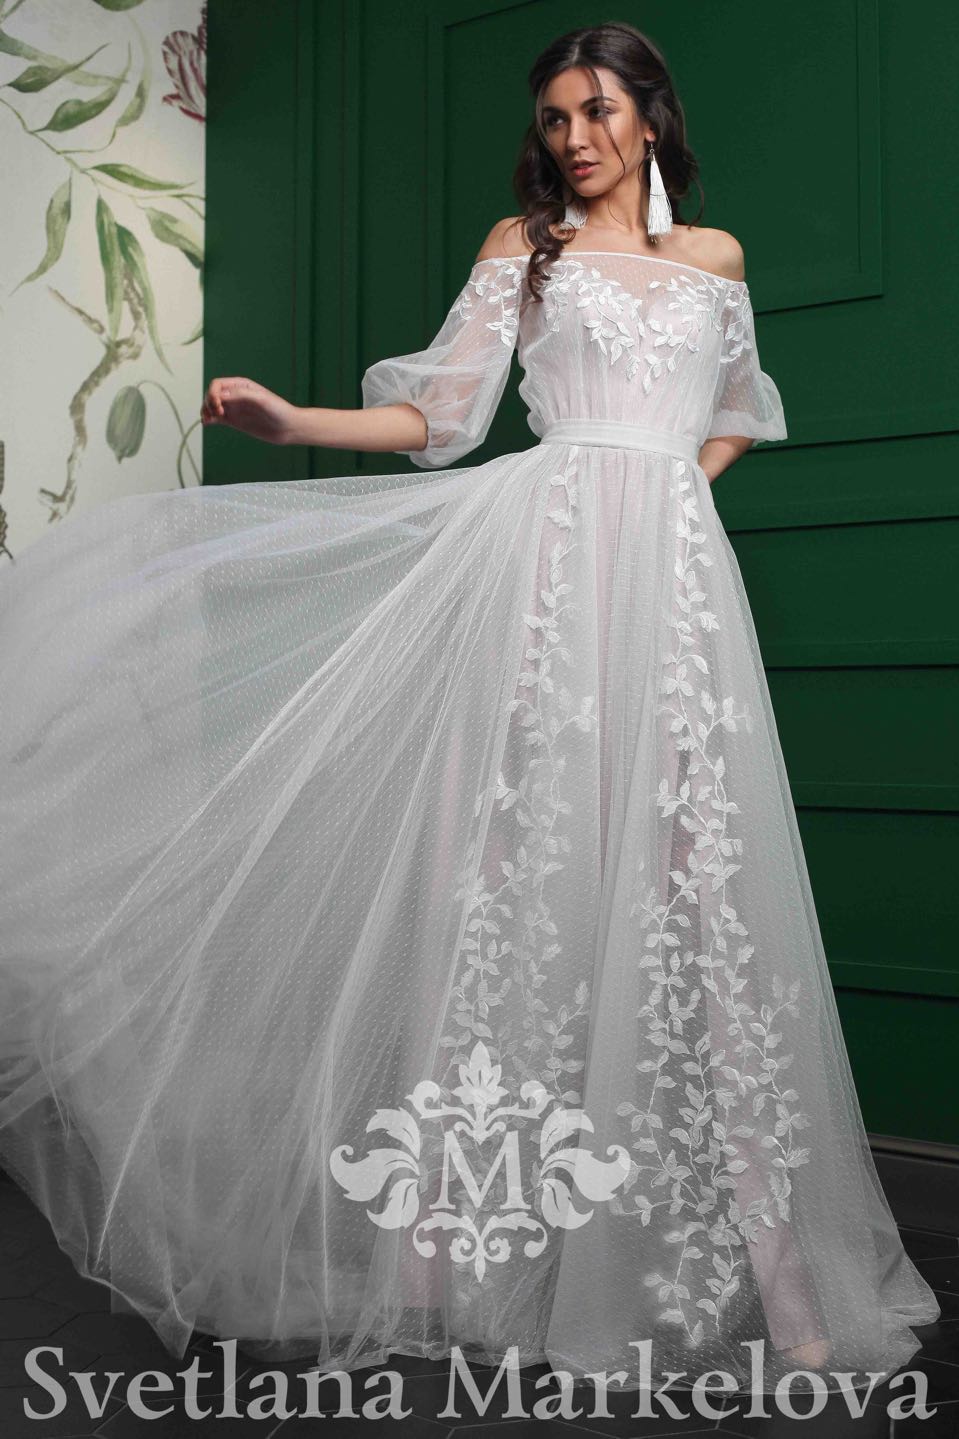 Свадебое платье Svetlana Markelova 2019 (Светлана Маркелова)